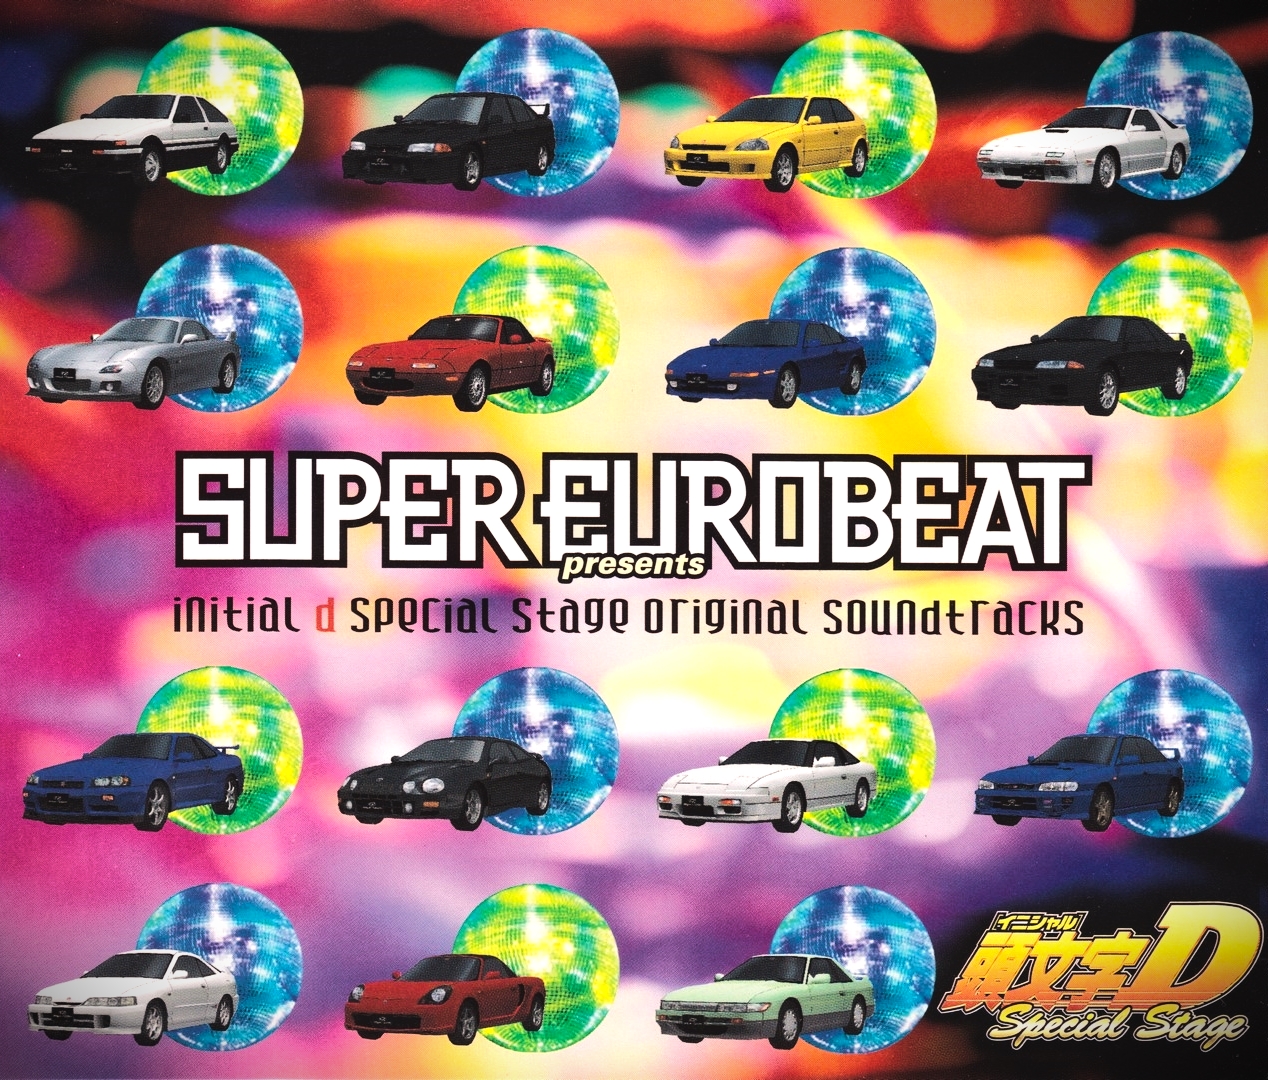 Super Eurobeat Presents Initial D Special Stage Original